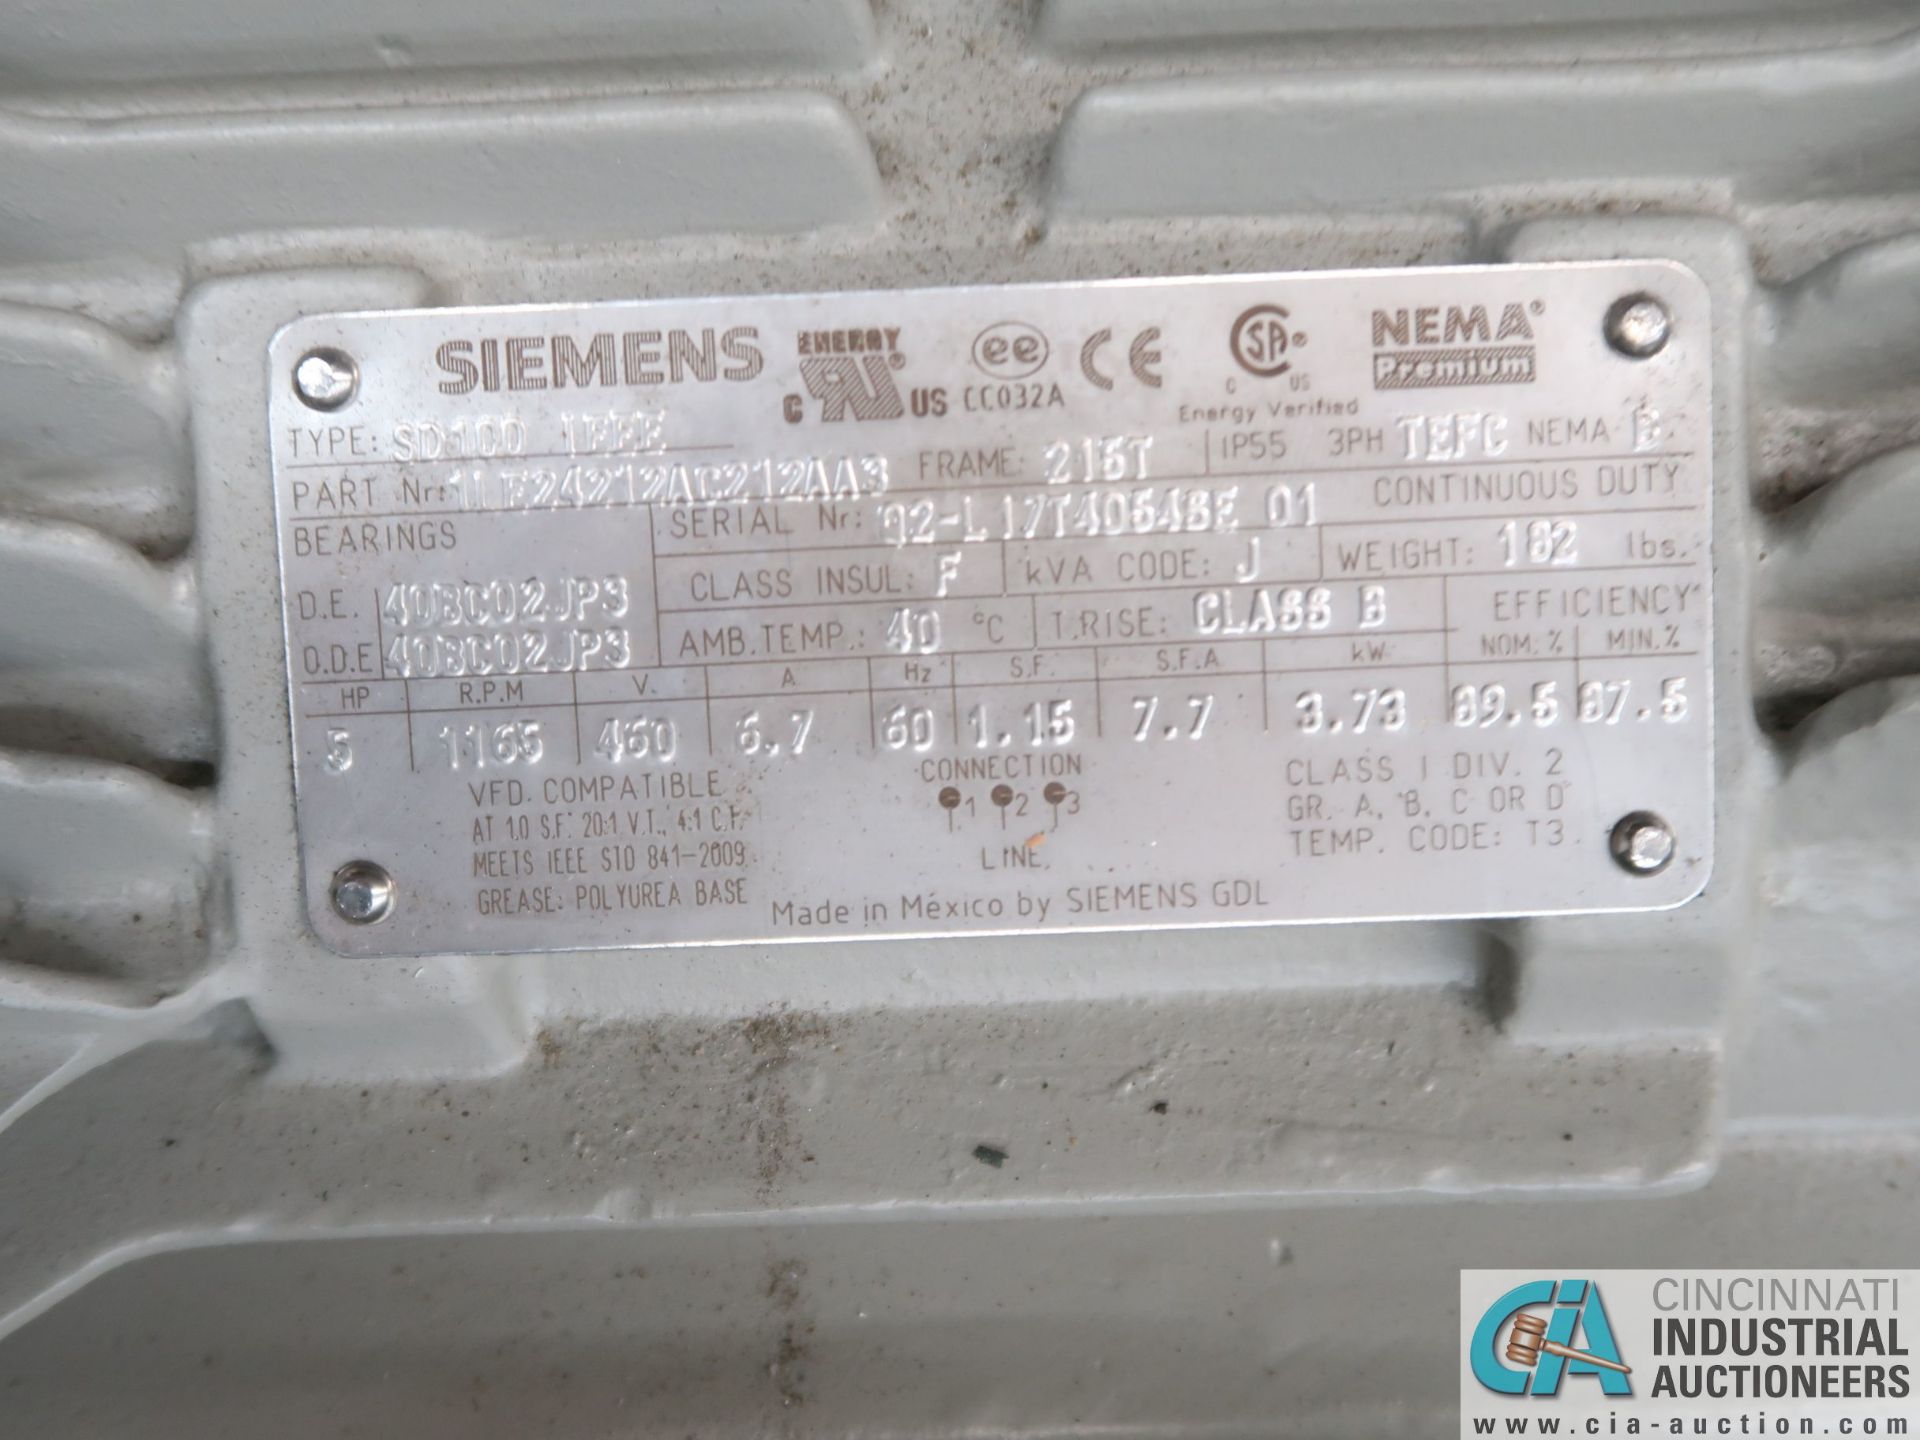 5 HP SIEMENS SD100 IEEE ELECTRIC MOTOR, 1,155 RPM (NEW) - Image 2 of 2